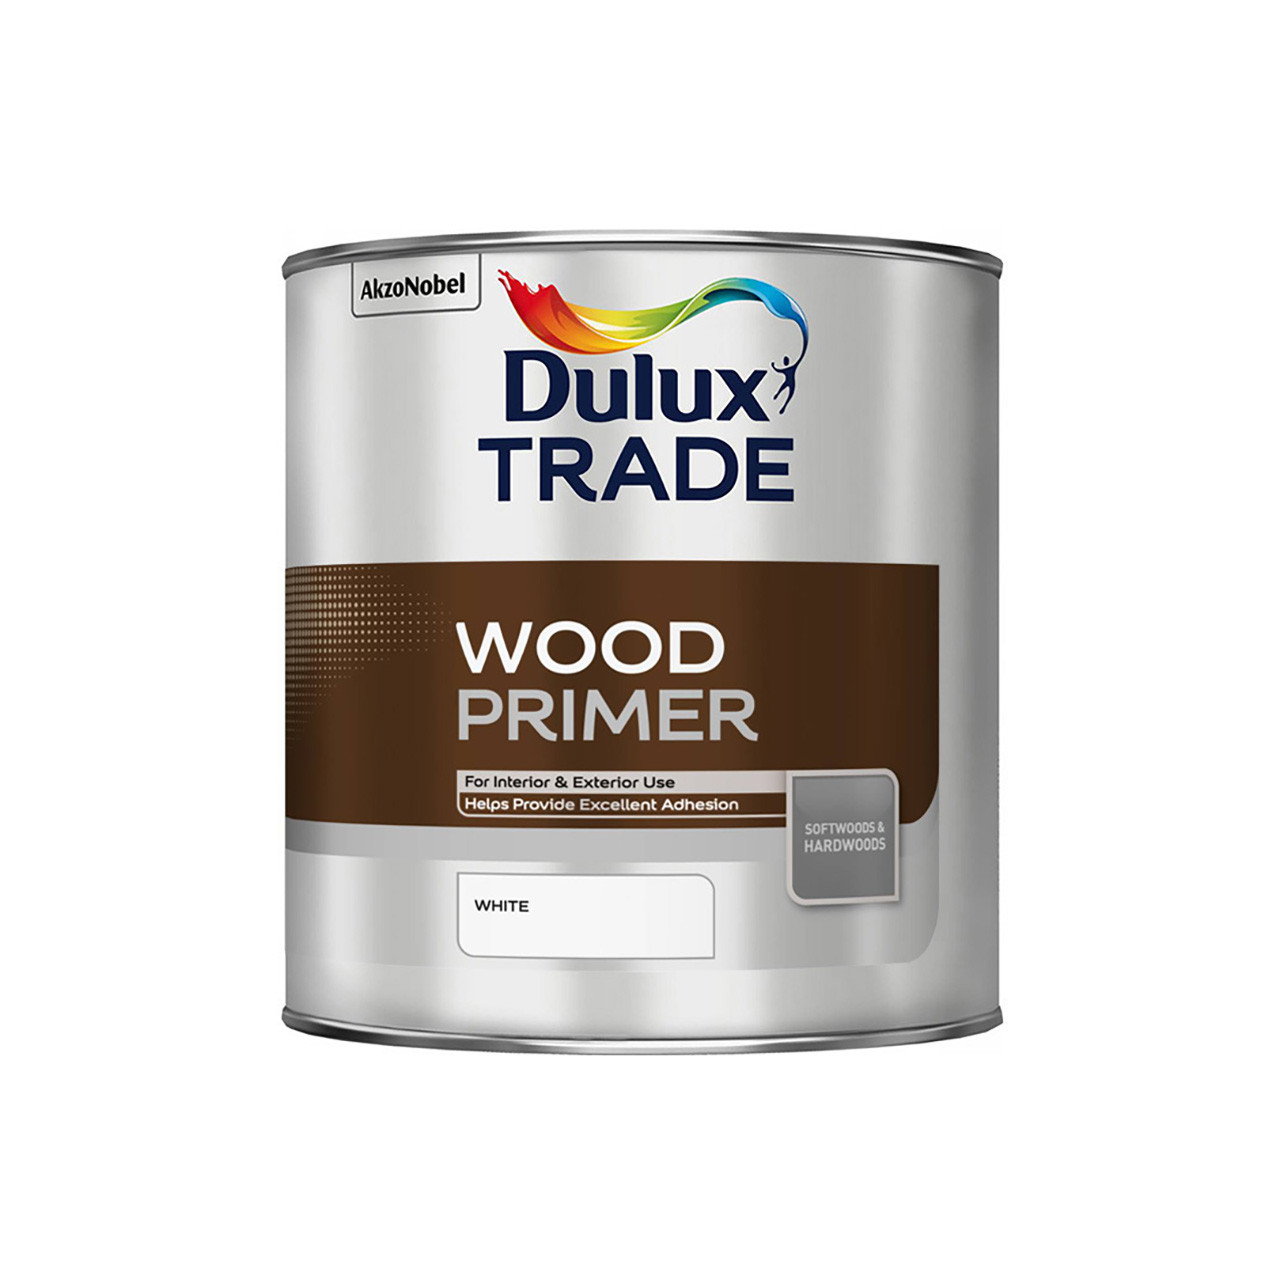 t/481/dulux-trade-wood-primer-white-25l-b001168-1__93396.jpg